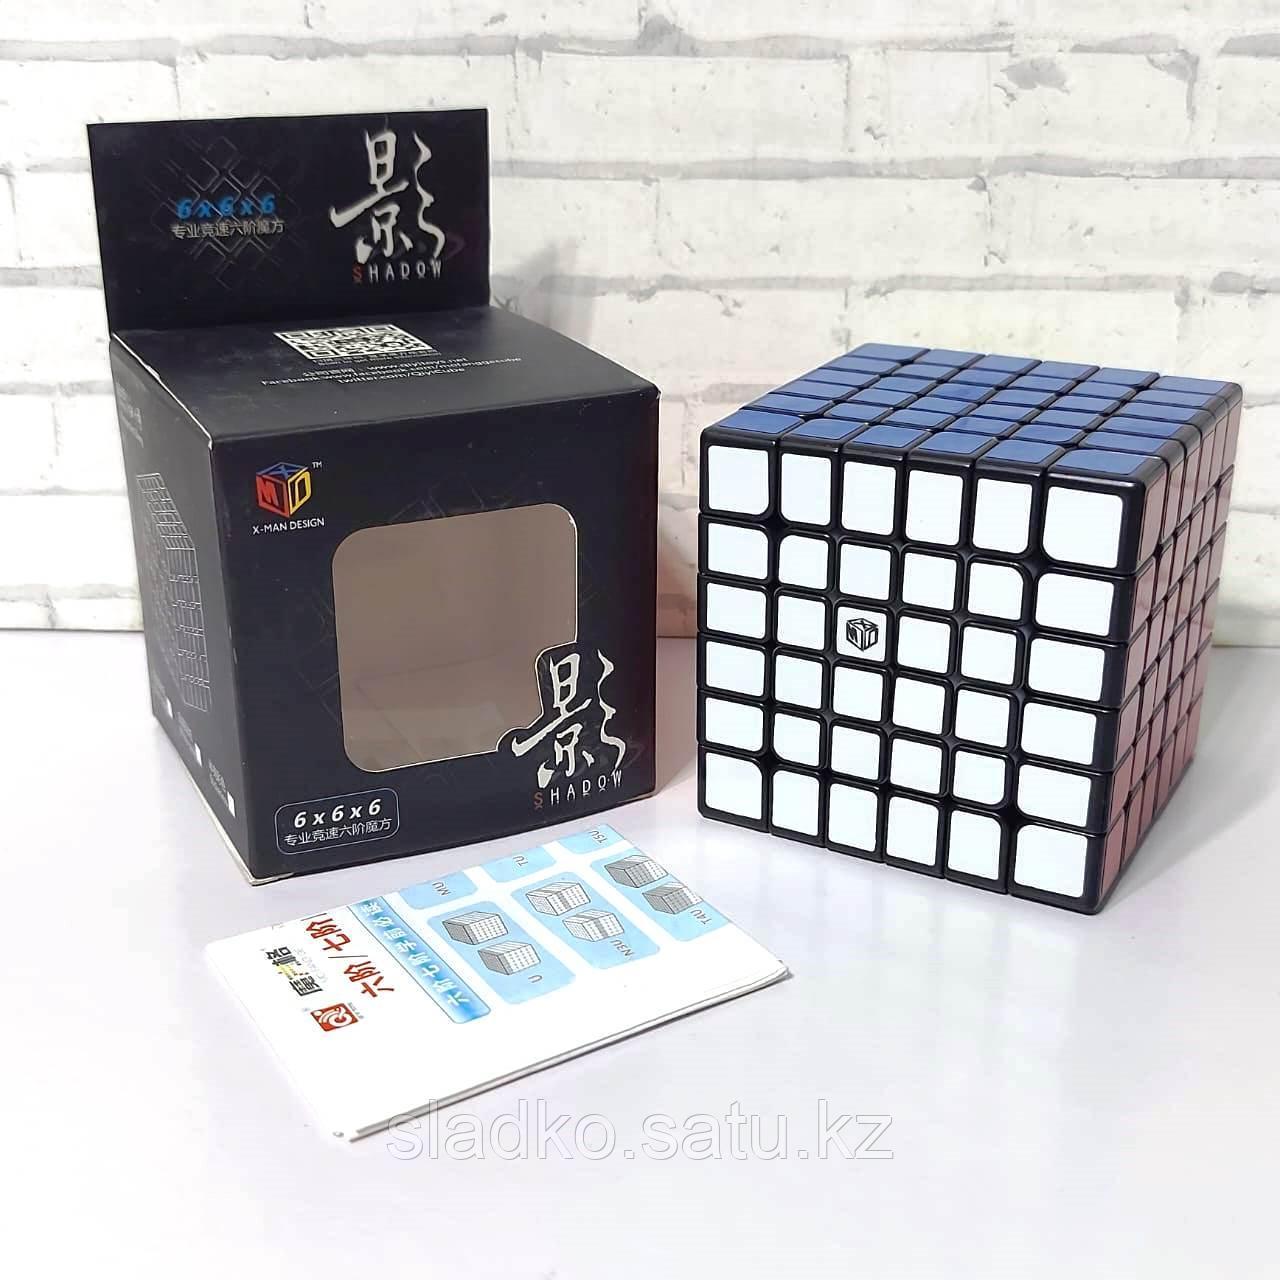 QiYi MoFangGe X-Man Shadow 6x6   Скоростной кубик Рубика